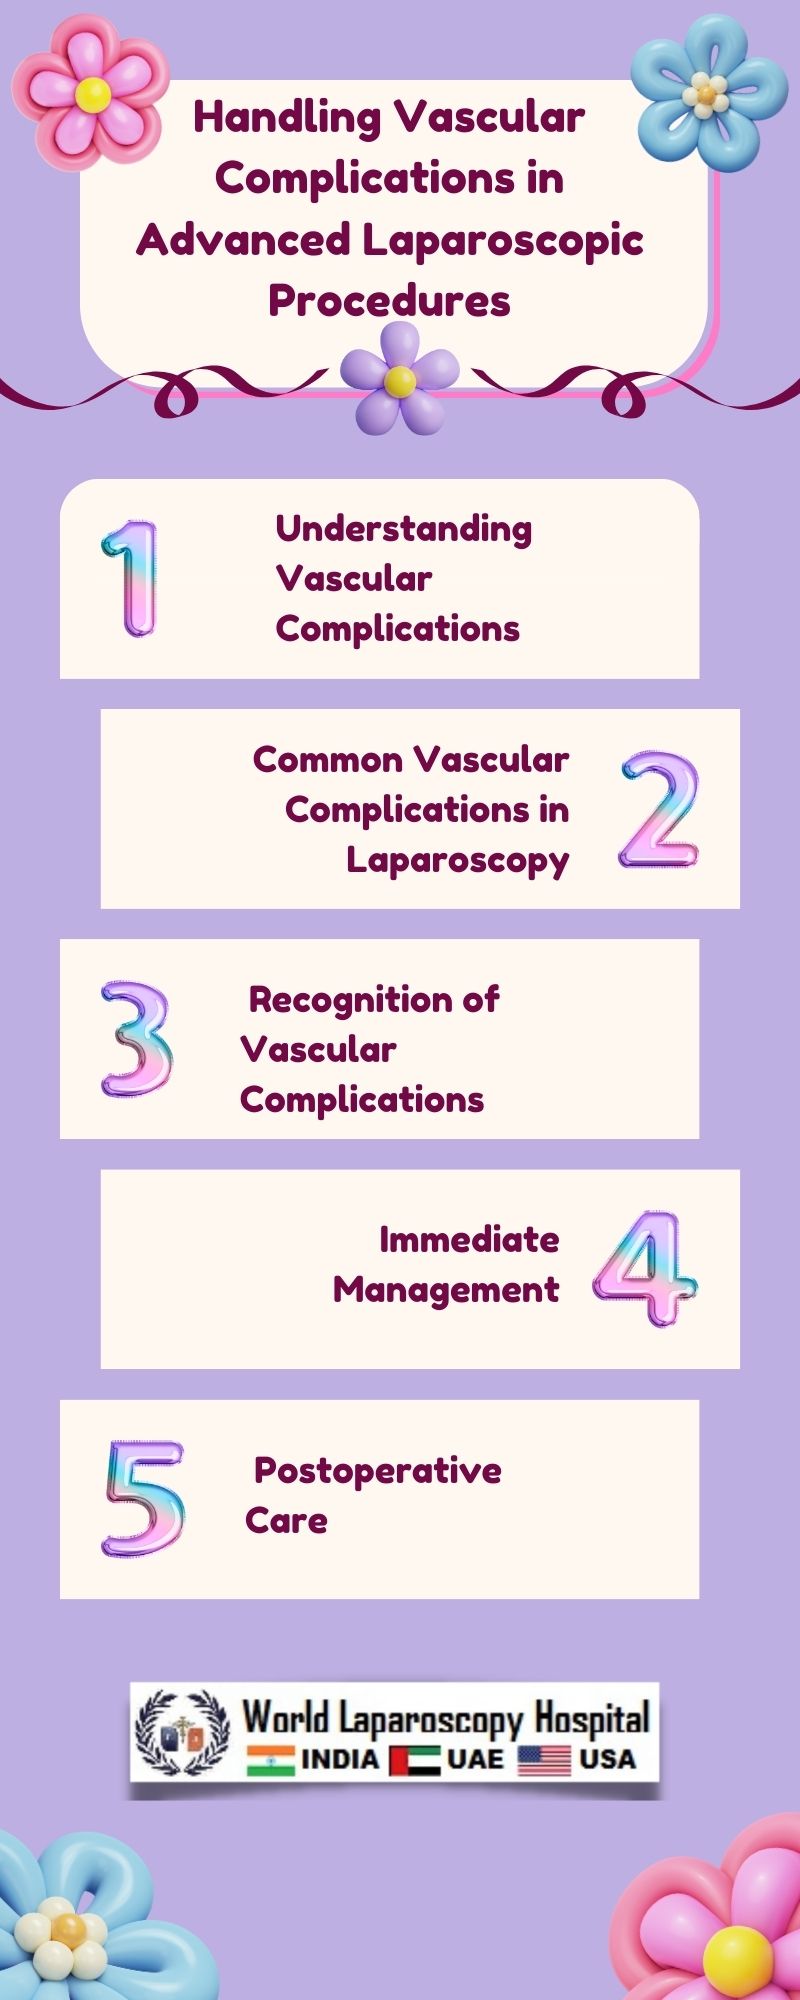 Handling Vascular Complications in Advanced Laparoscopic Procedures